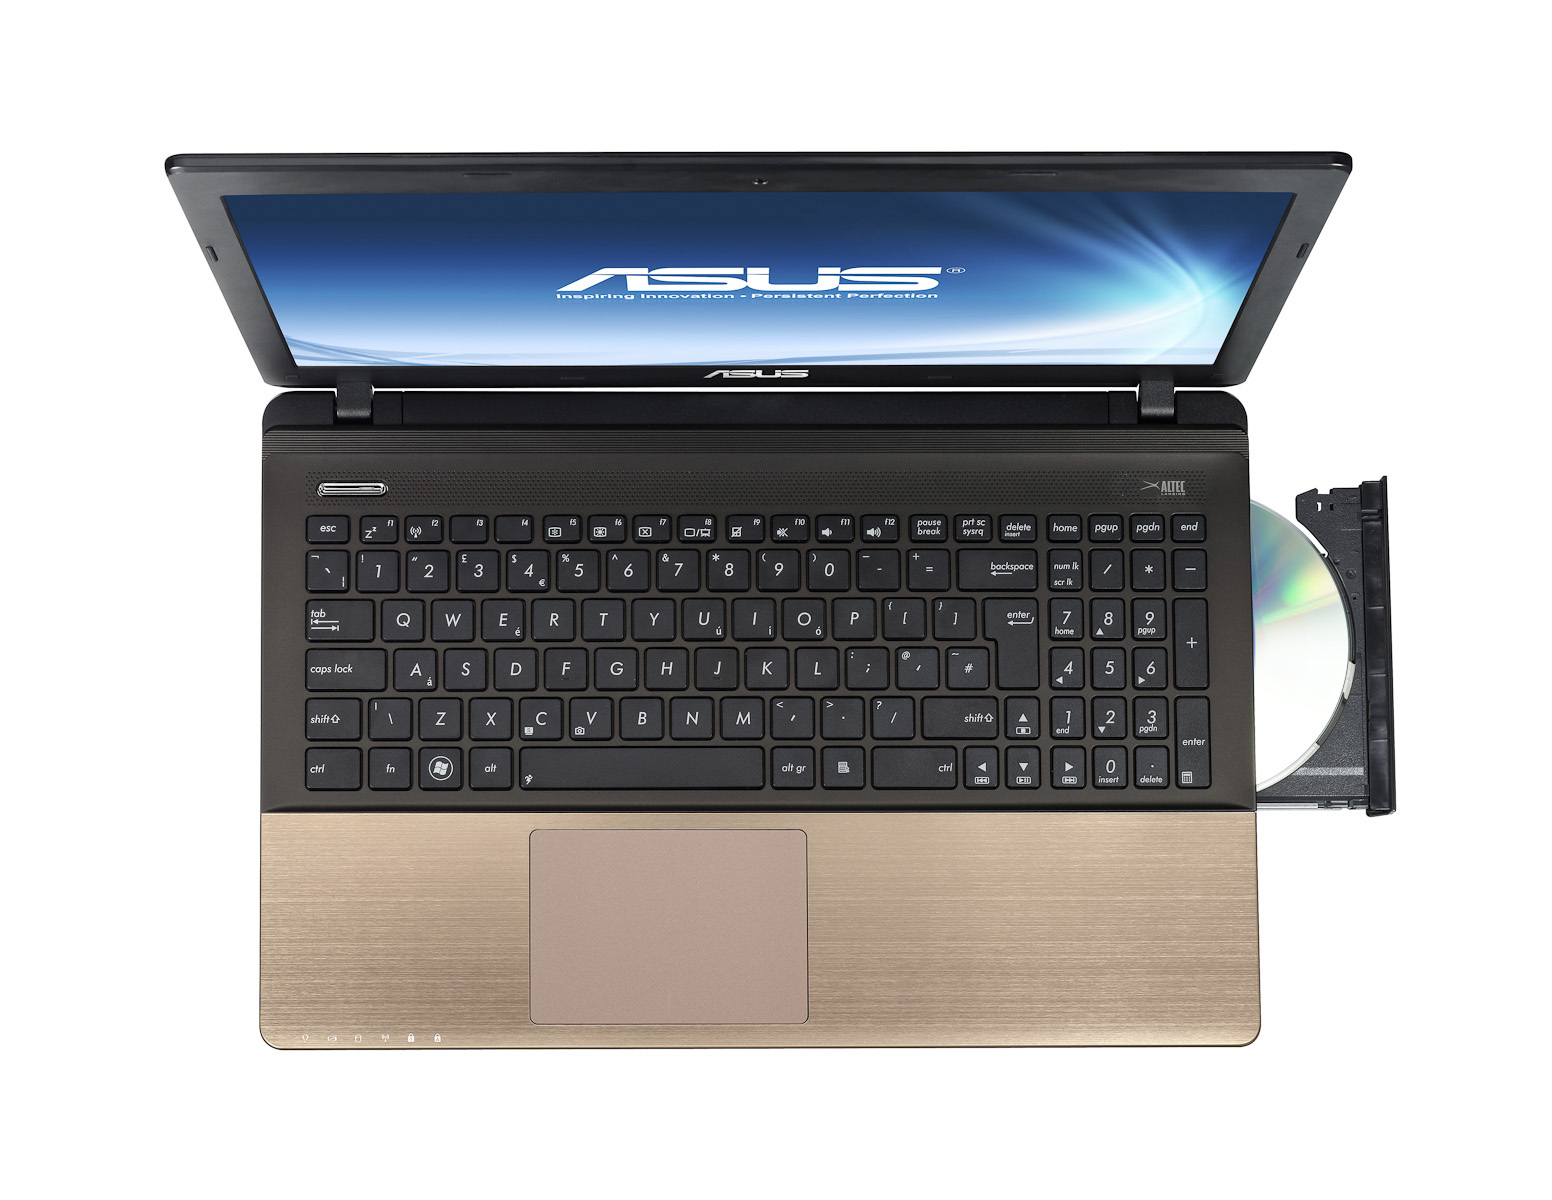 Laptop Asus K55A-SX024 - Intel Core i5-3210M 2.5GHz, 4GB RAM, 500GB HDD, VGA Intel HD Graphics 4000, 15.6 inch